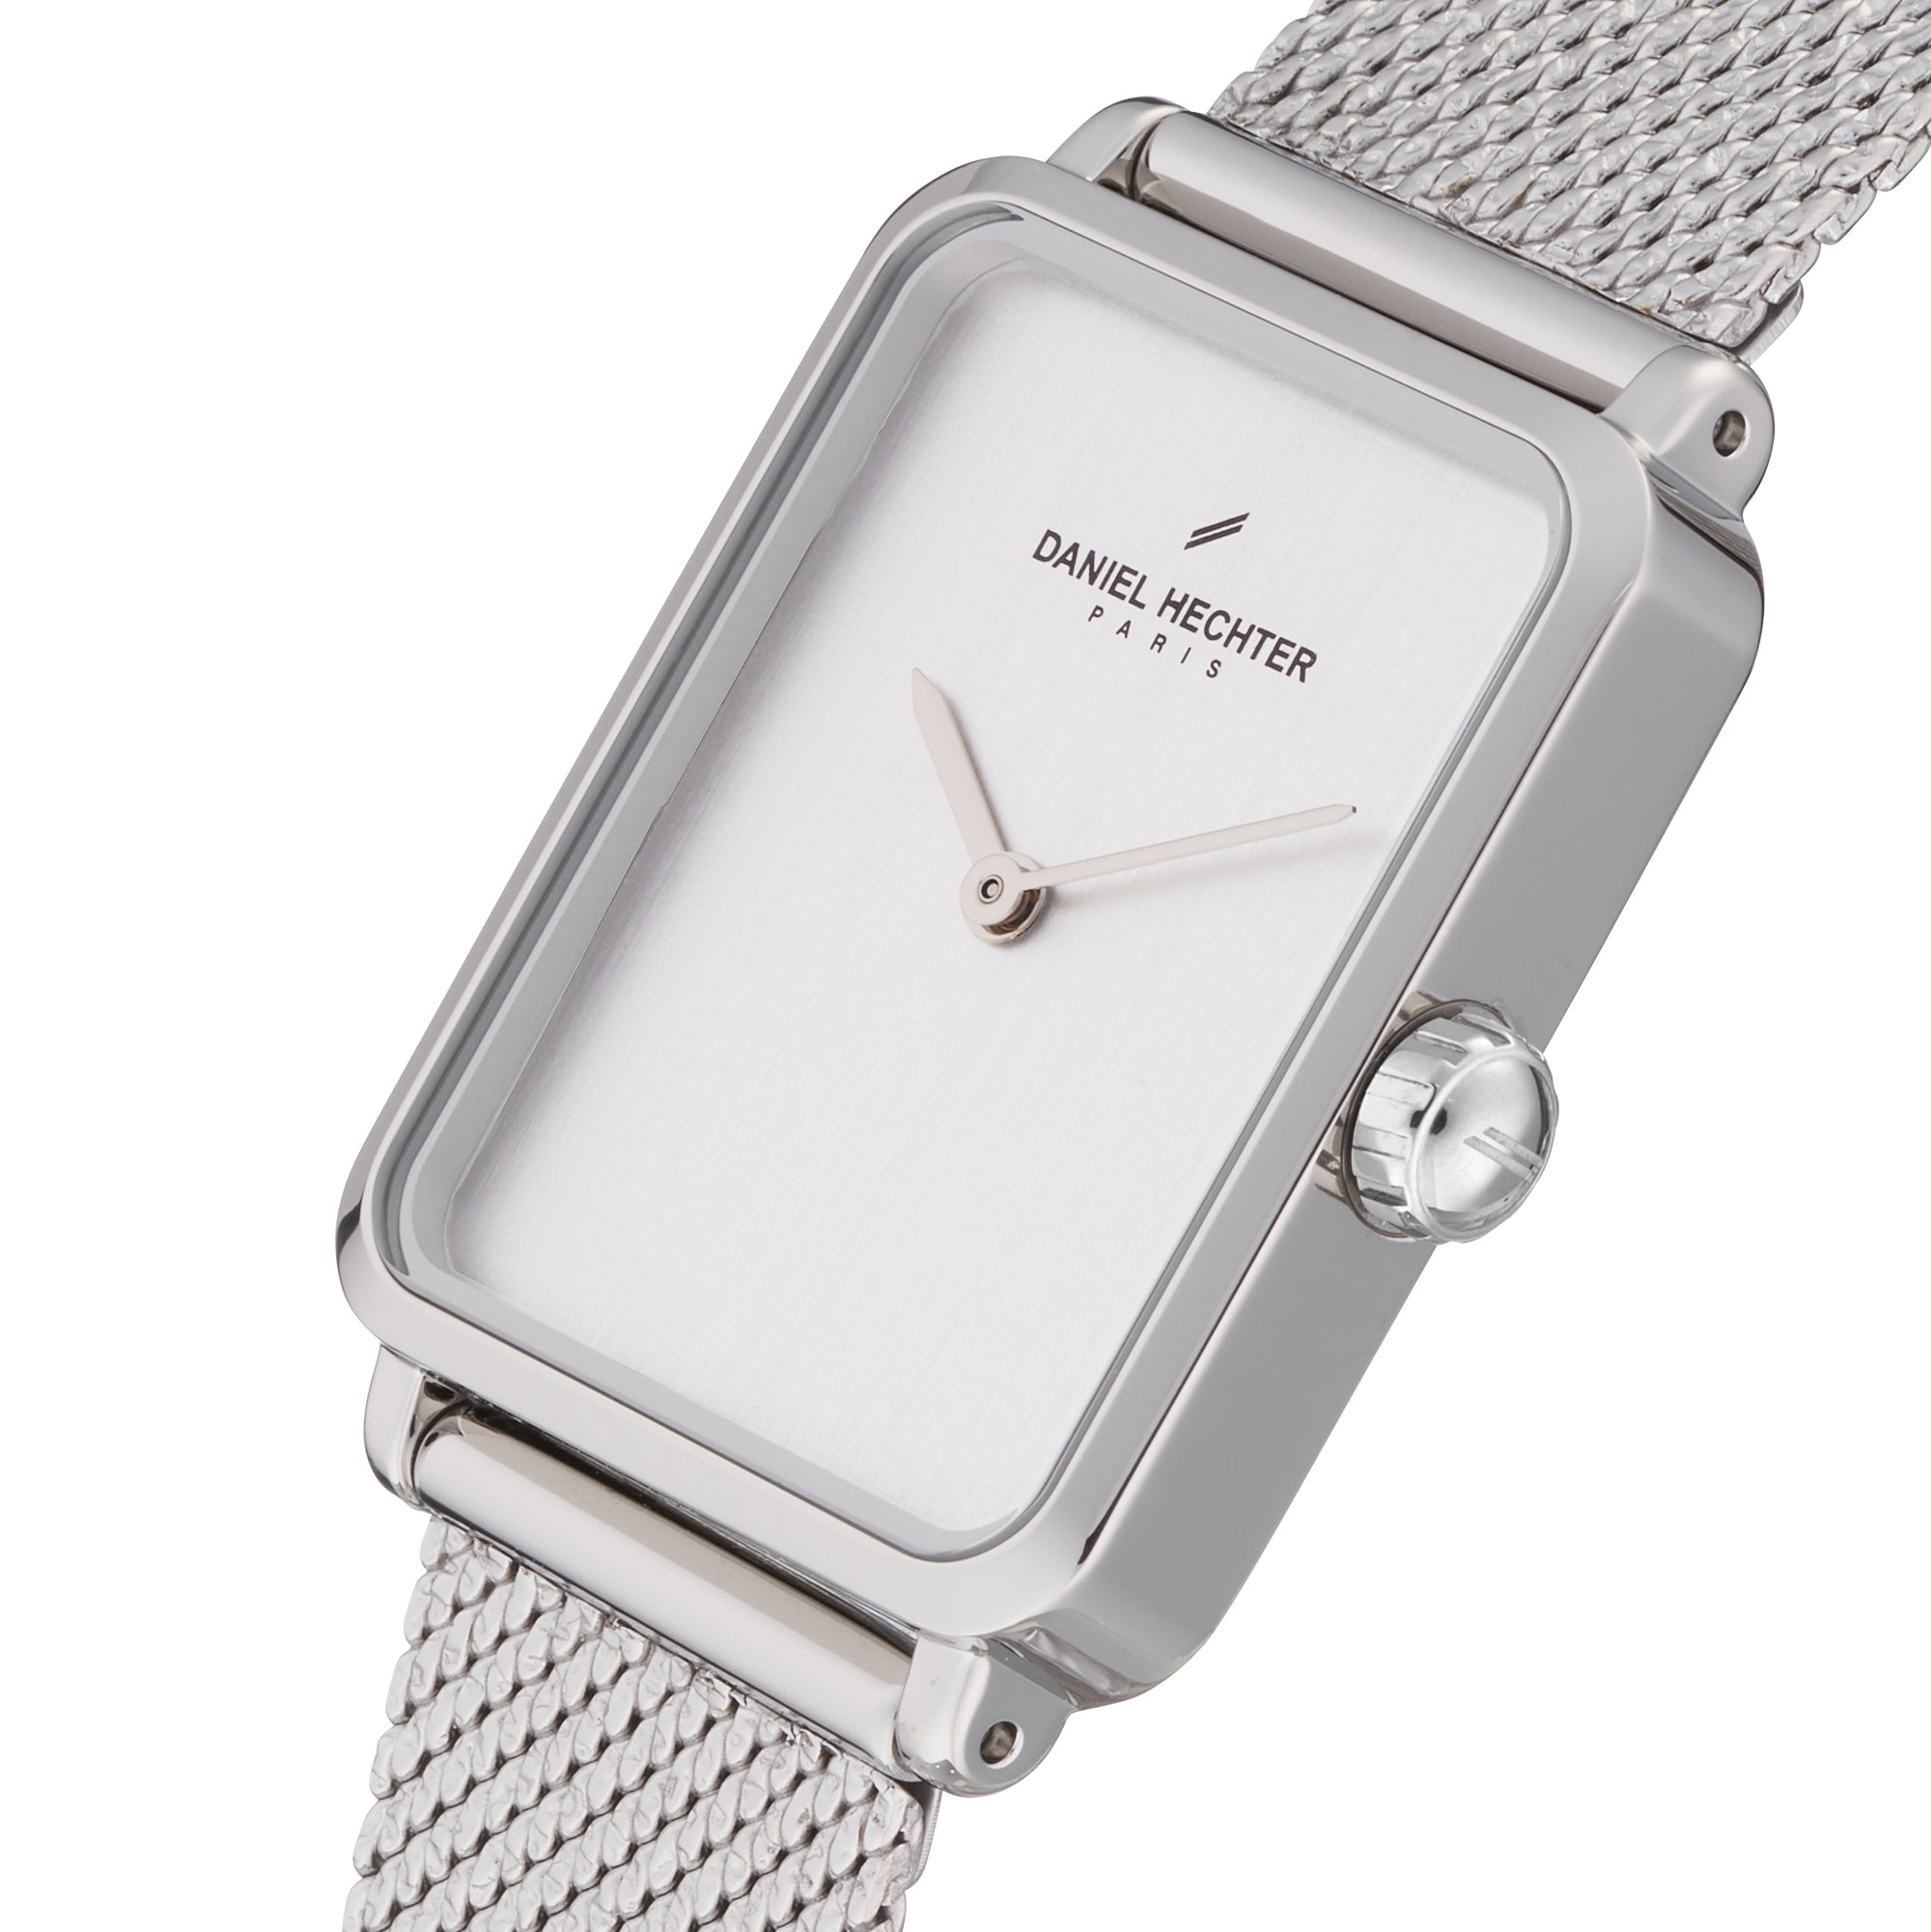 République Buy for Best Daniel Women Watch – Hechter Hechter Watch | Strap Daniel Time